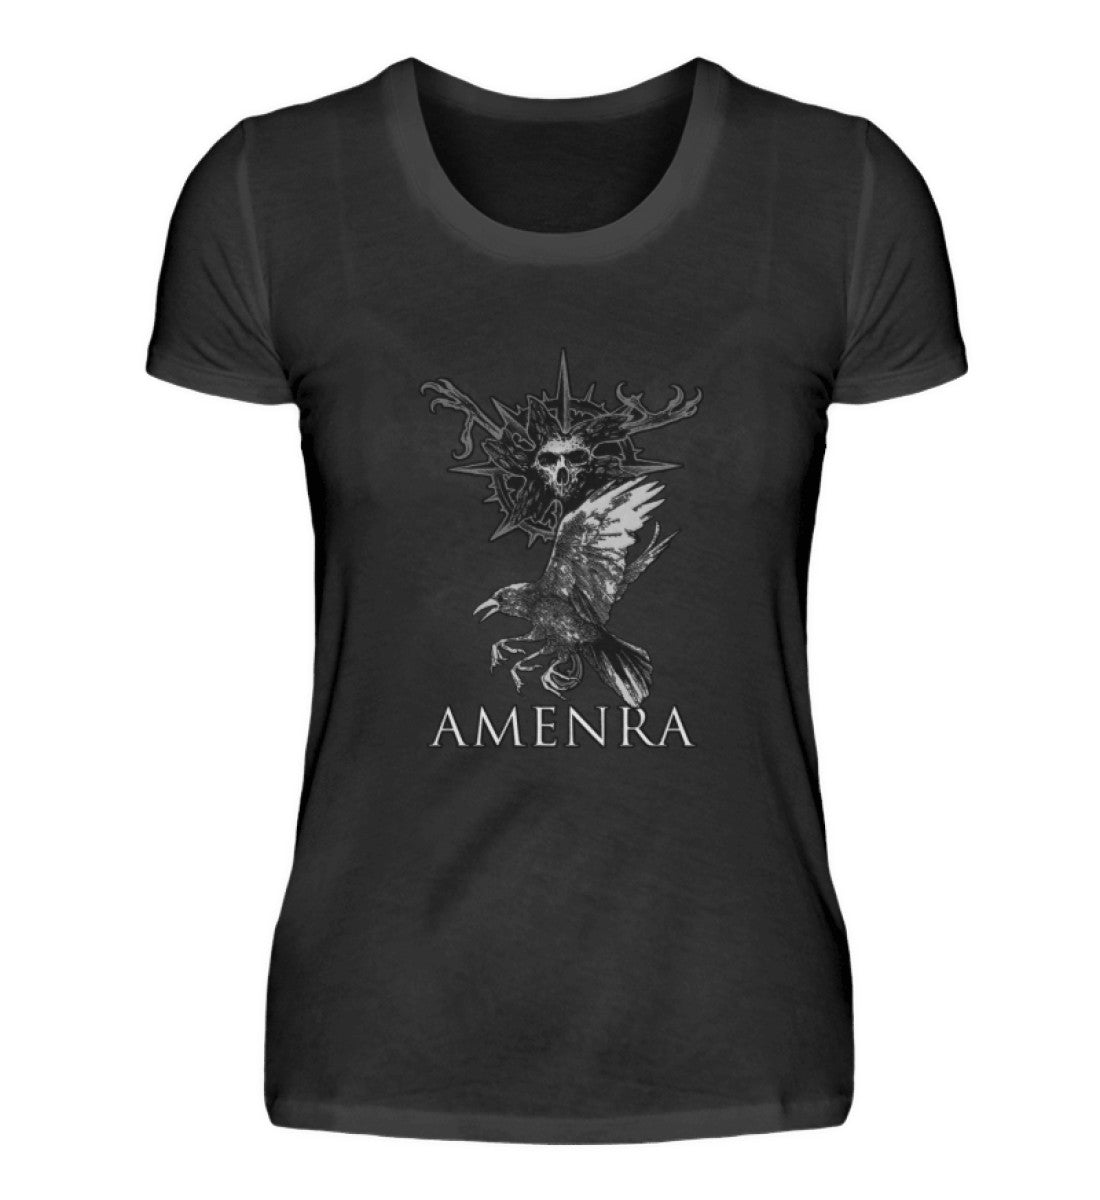 Amenra T-Shirt Women